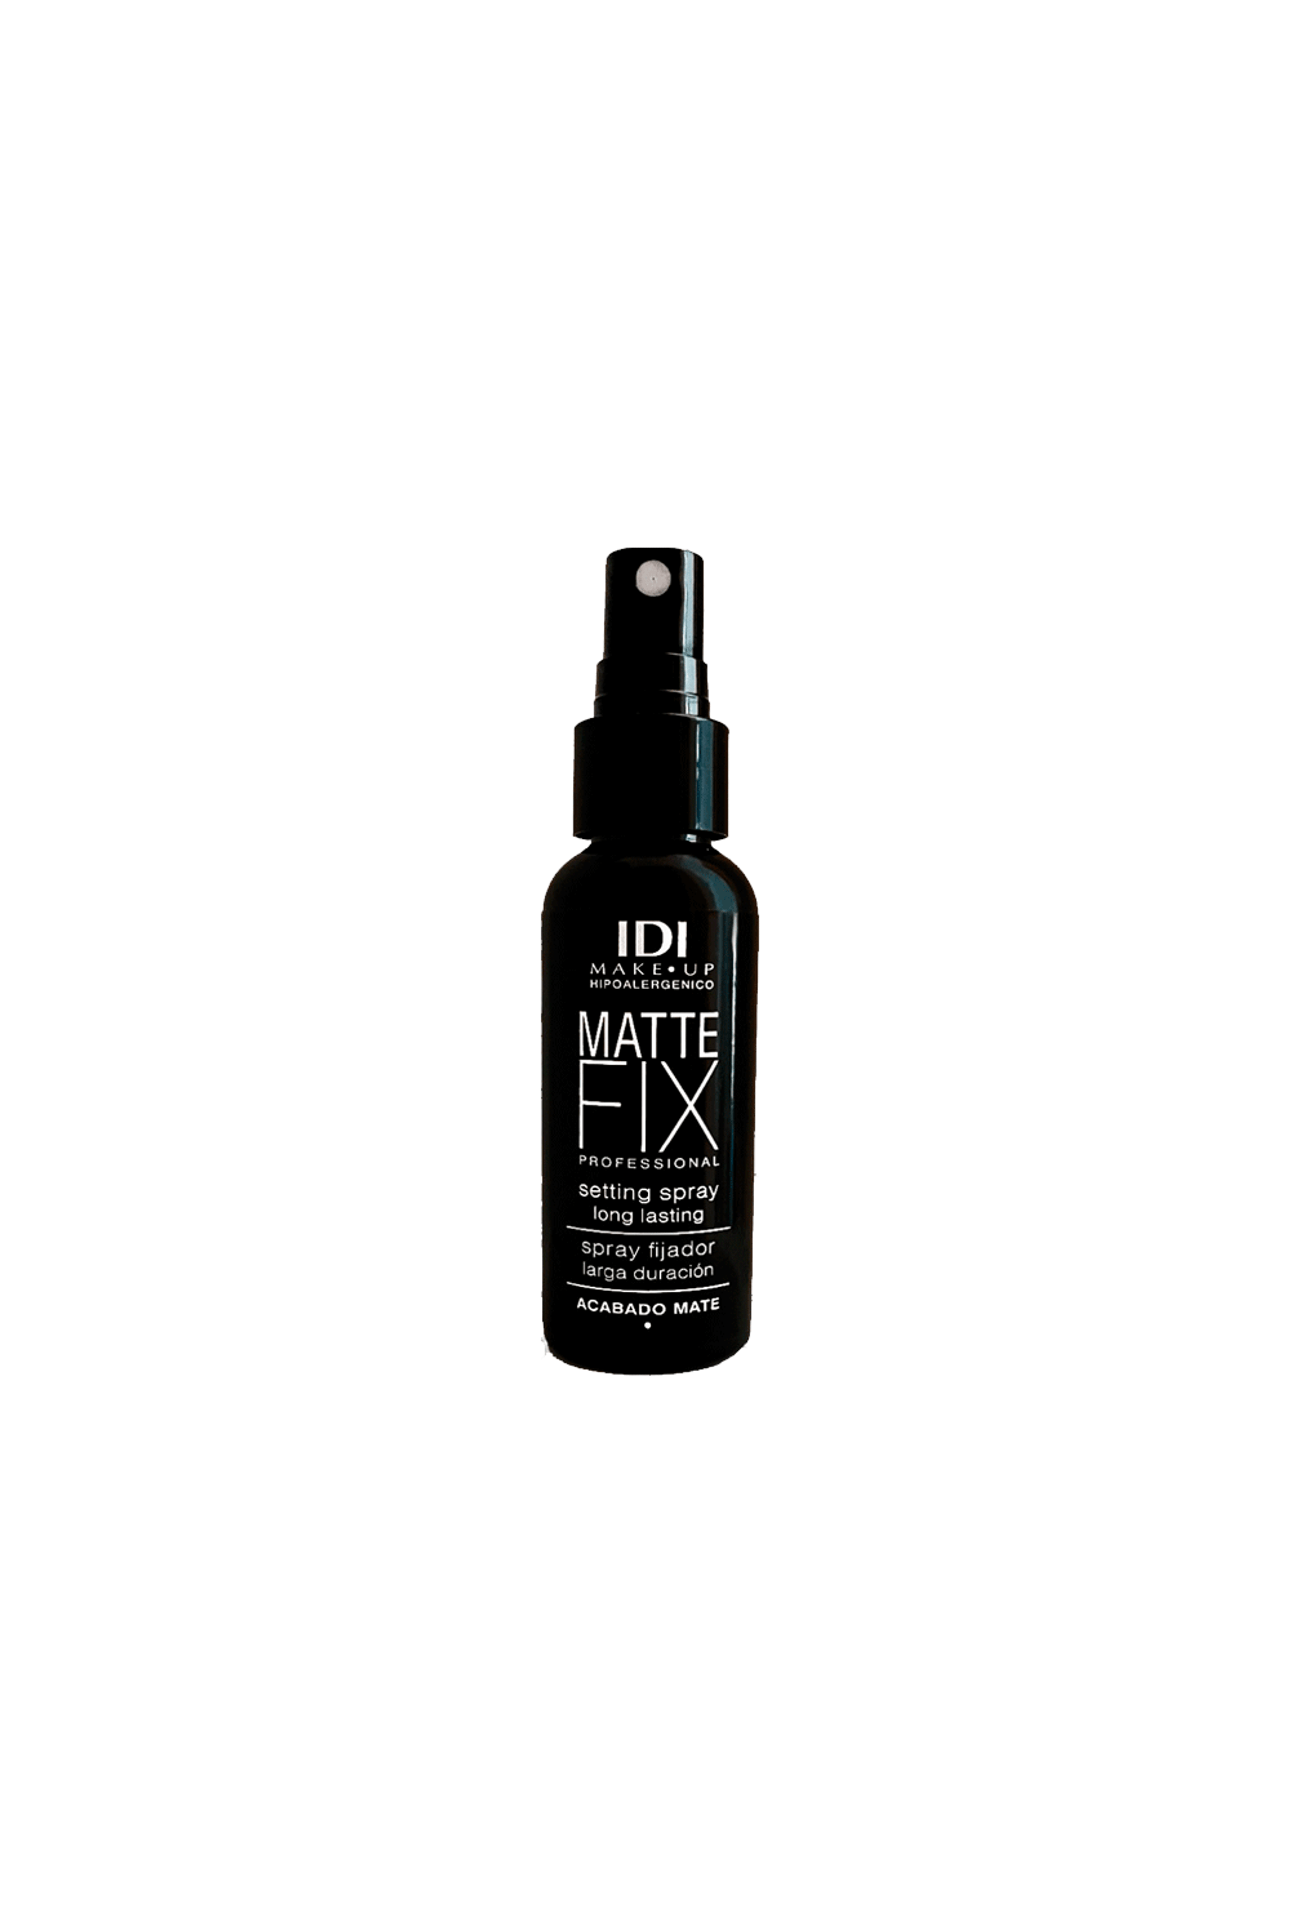 IDI-Spray-Fijador-De-Maquillaje-IDI-Matte-Fix-Larga-Duracion-0000077979742_img1